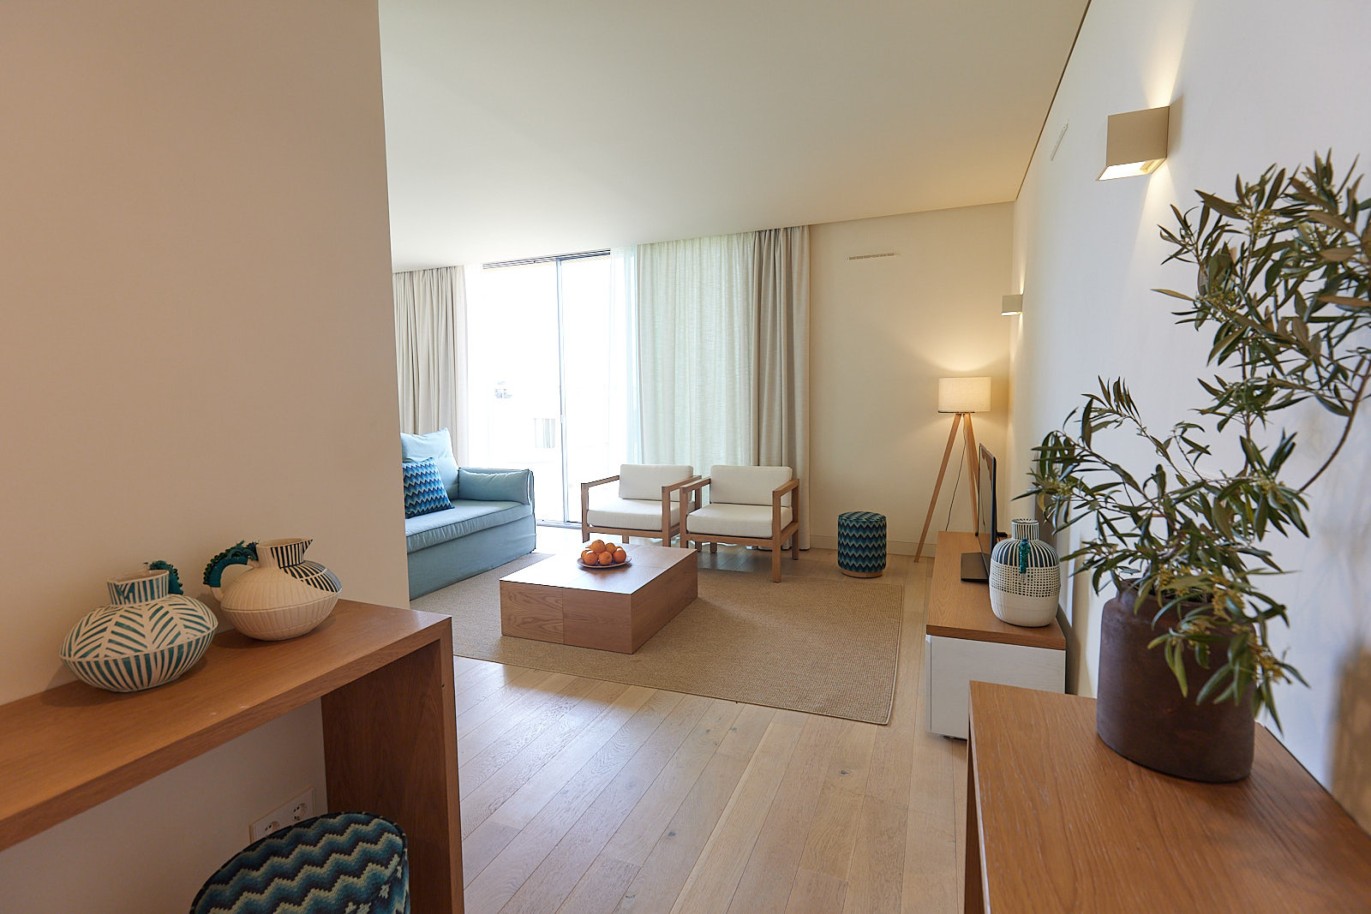 2 bedroom apartment in resort, for sale in Porches, Algarve_229249